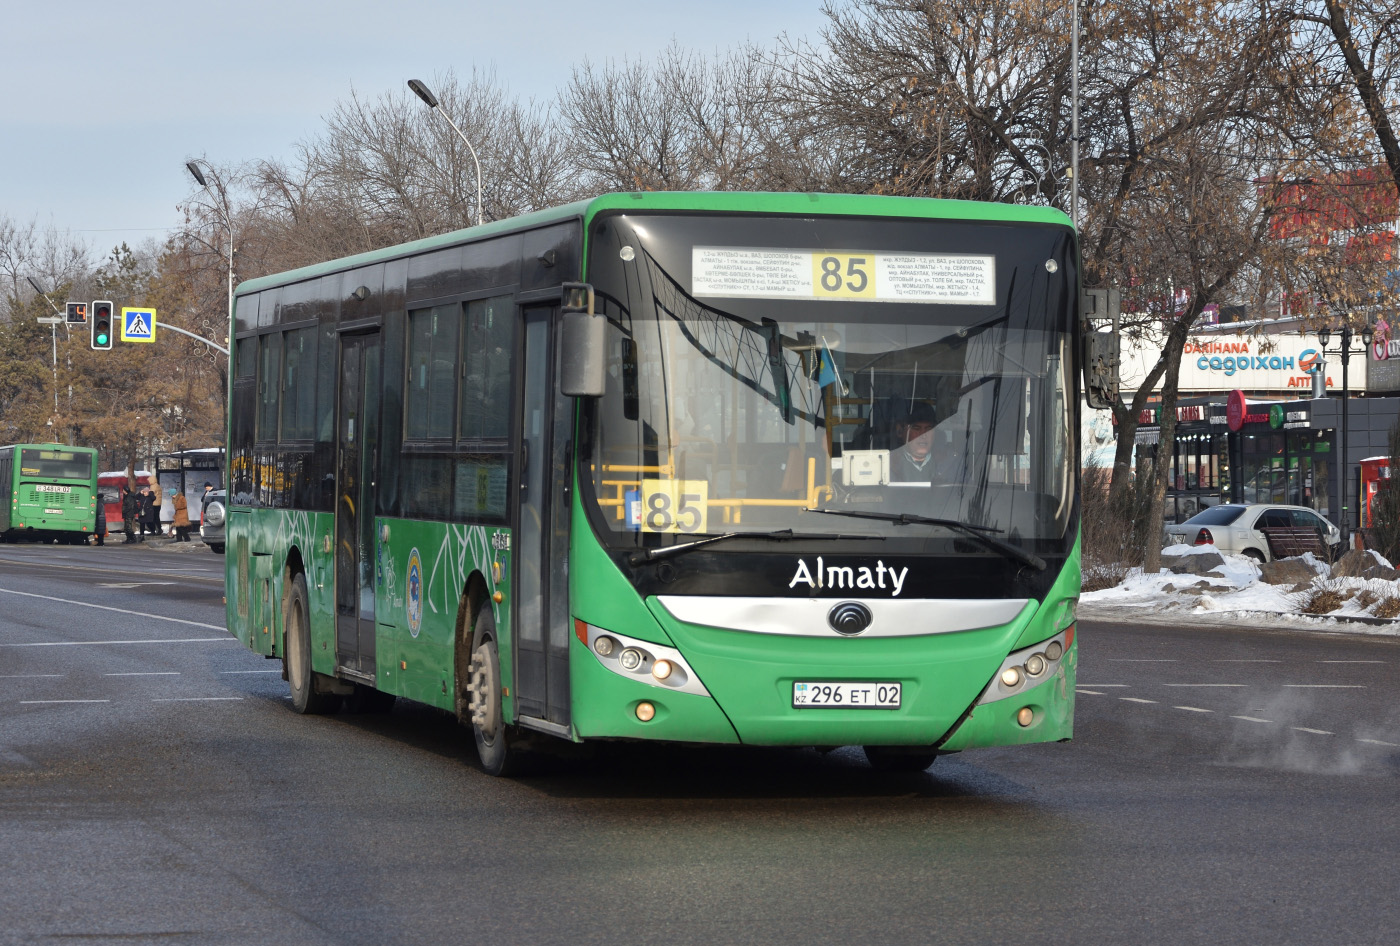 Almaty, Yutong ZK6118HGA č. 296 ET 02